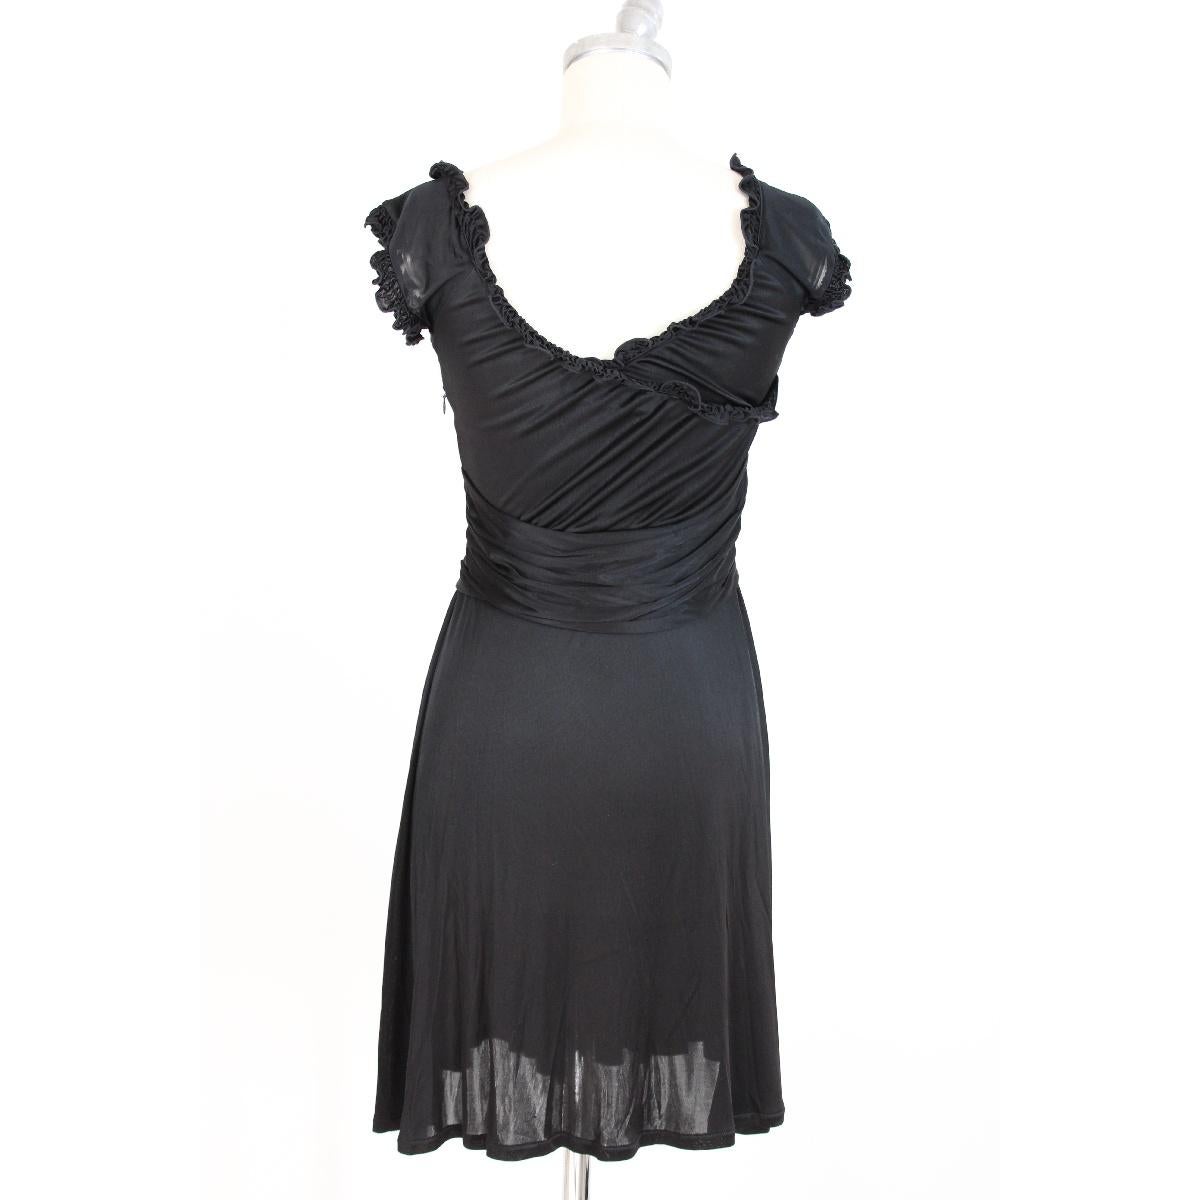 2000s black dress